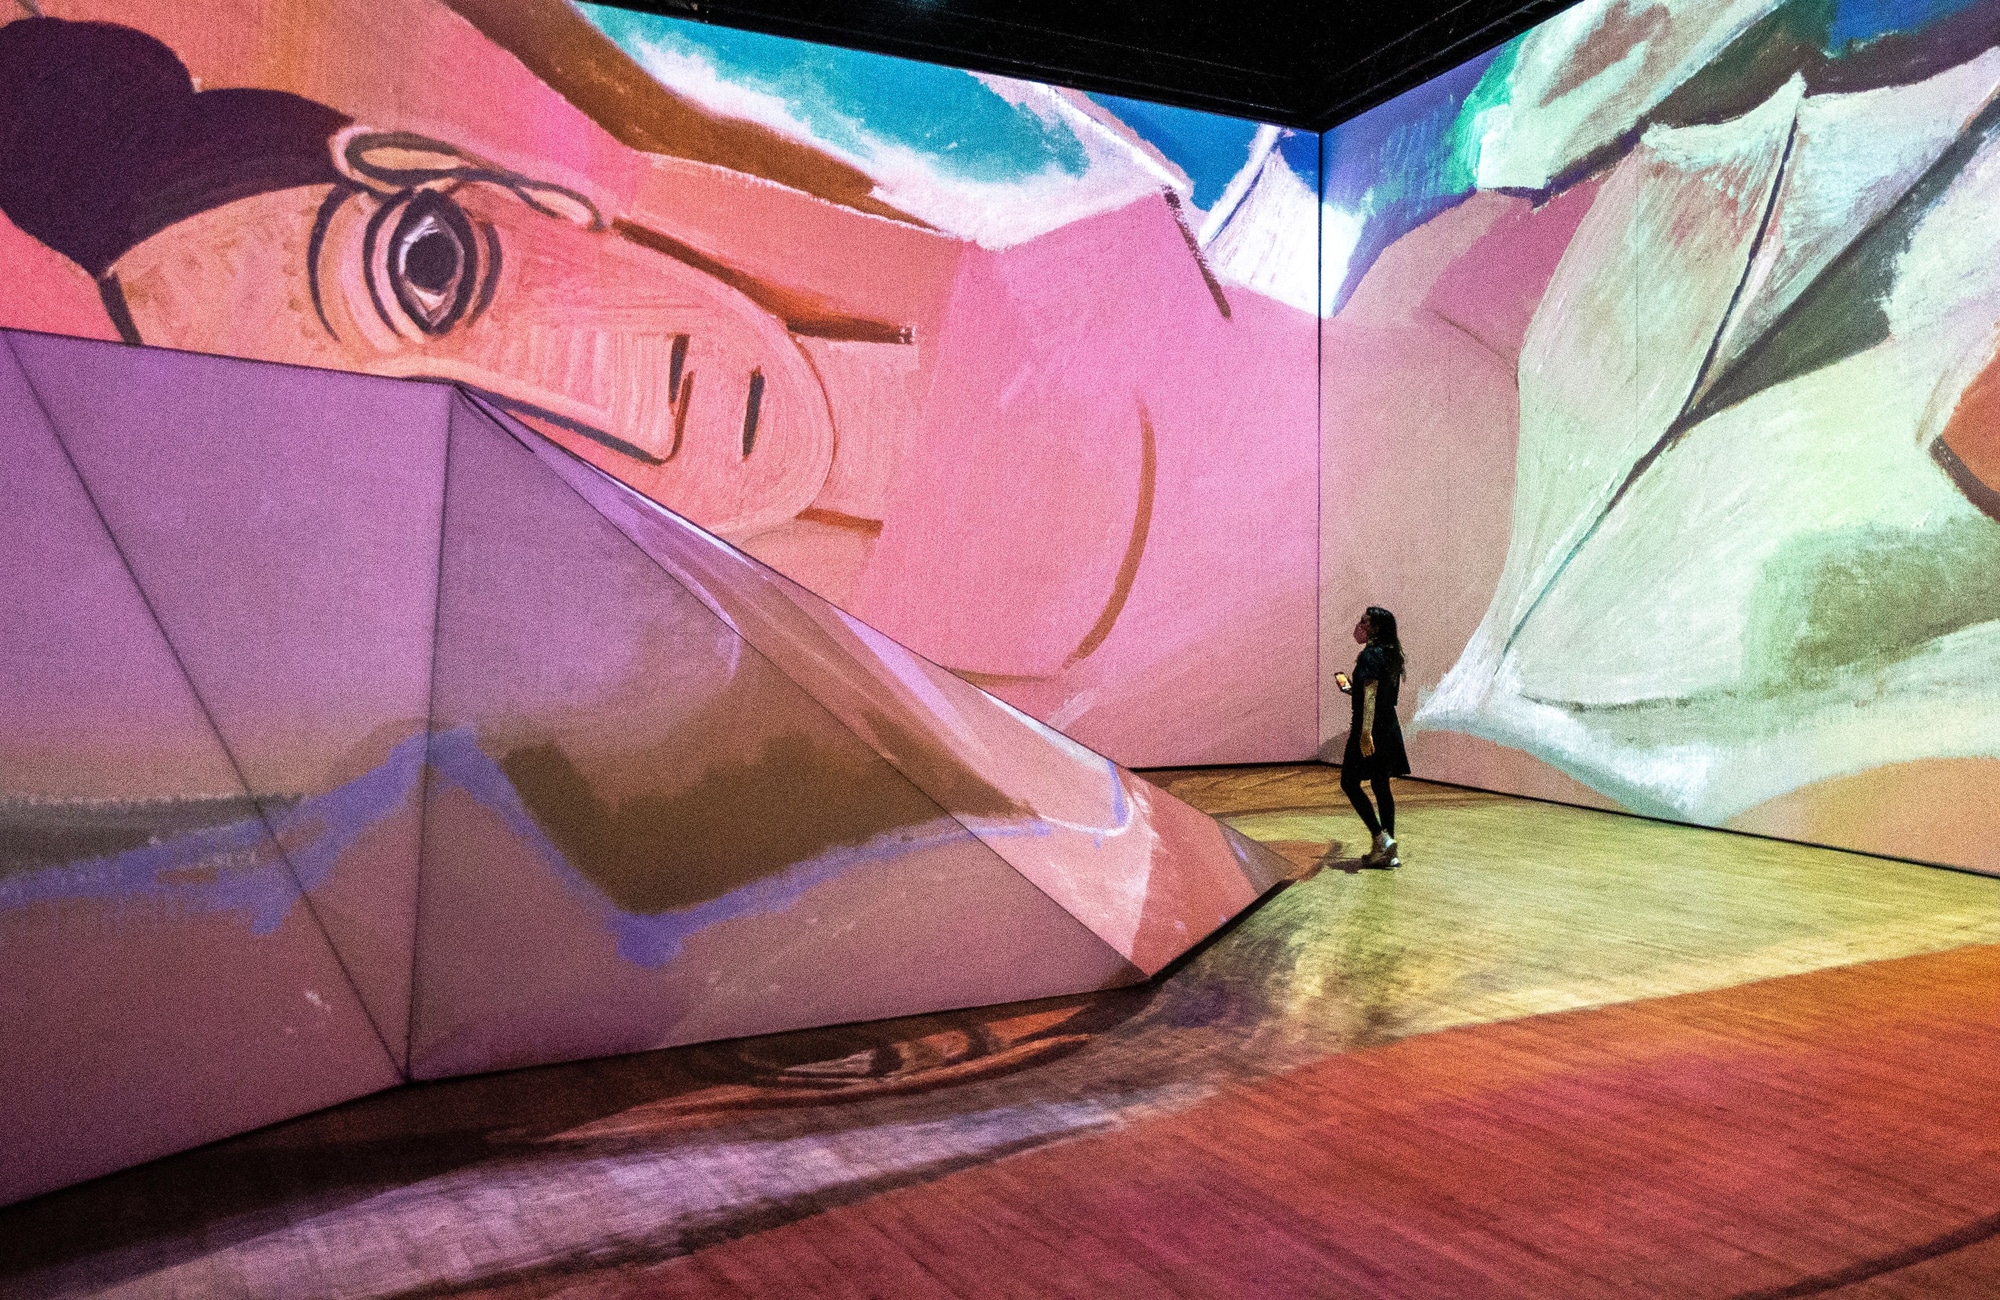 Imagine Picasso: The Immersive Exhibit